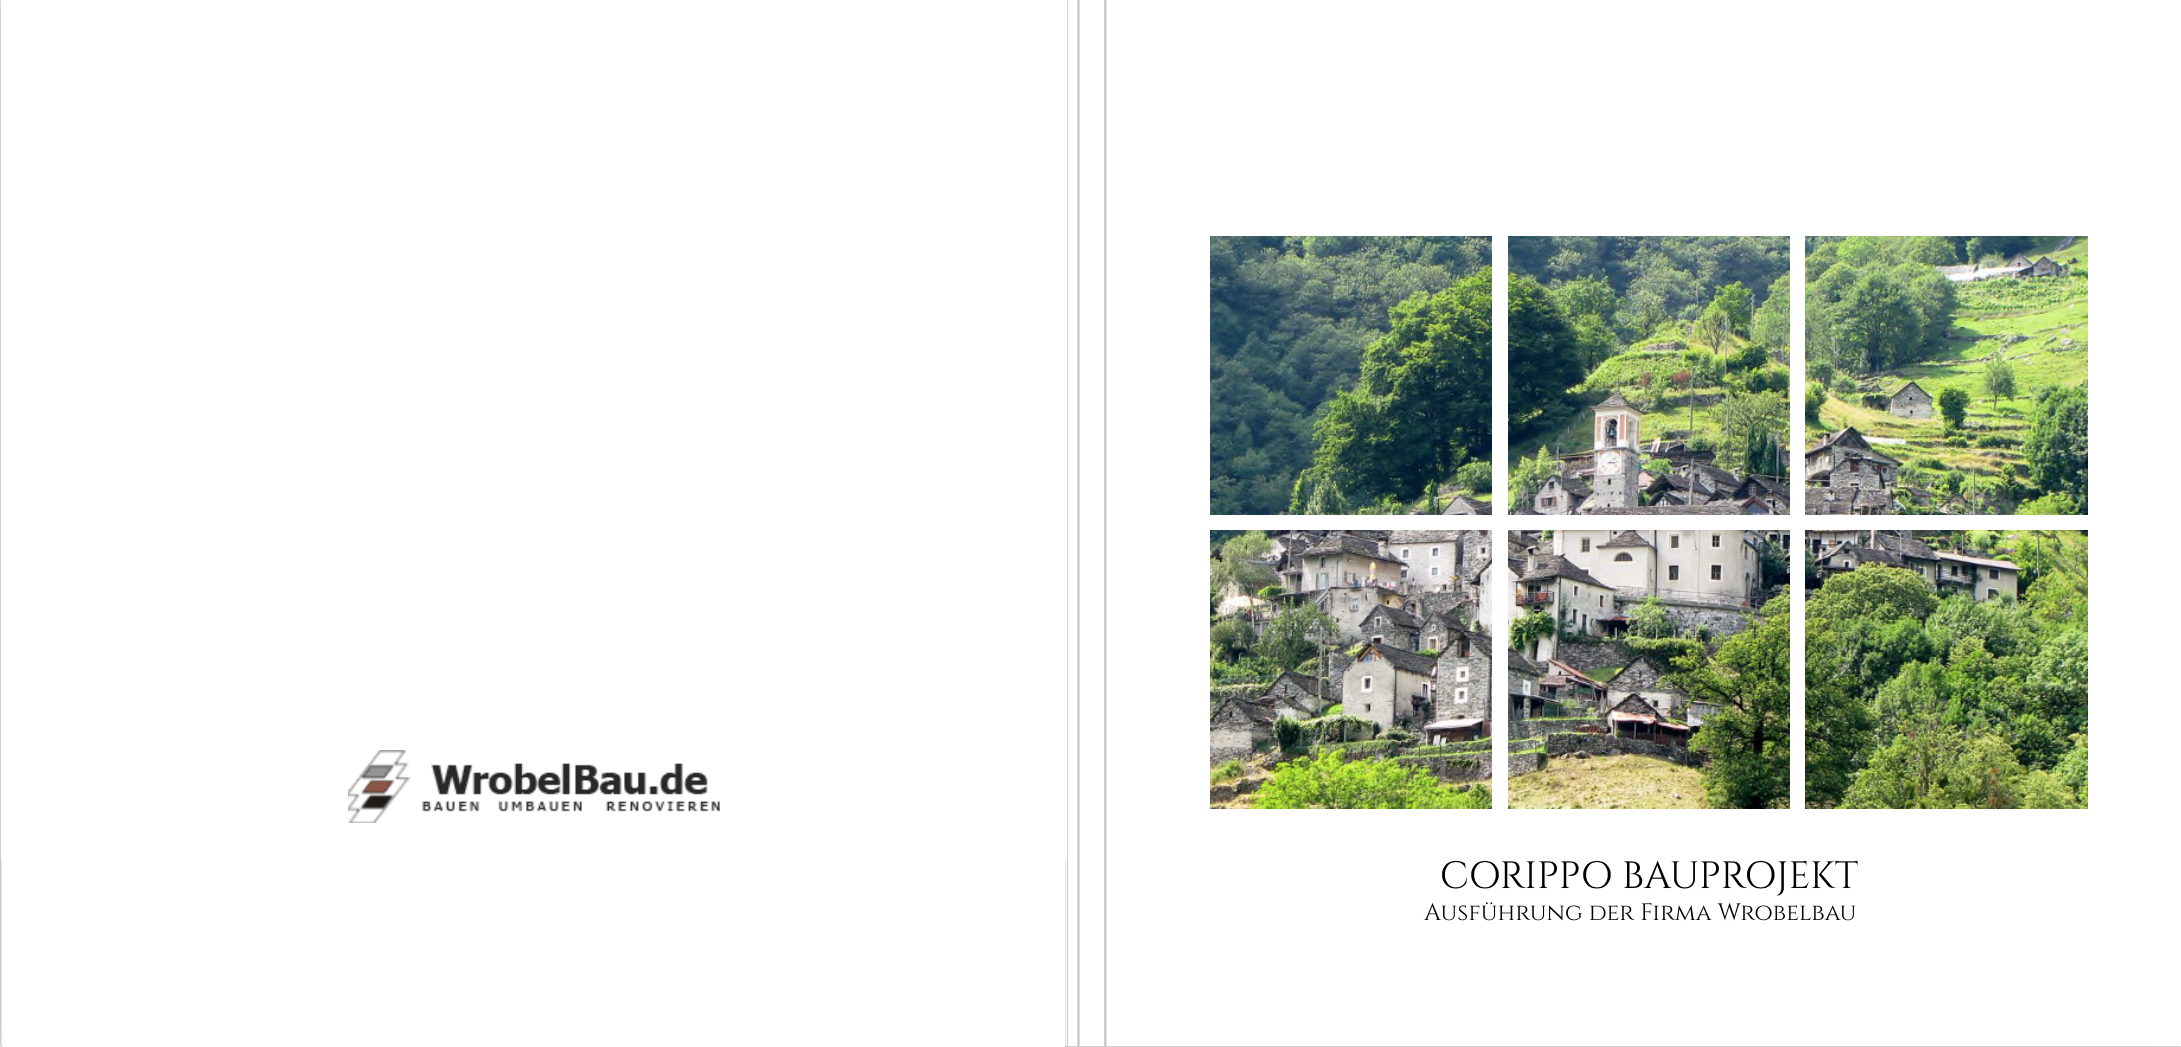 Bauprojekt Corippo Schweiz - Ausführung der Firma Wrobelbau